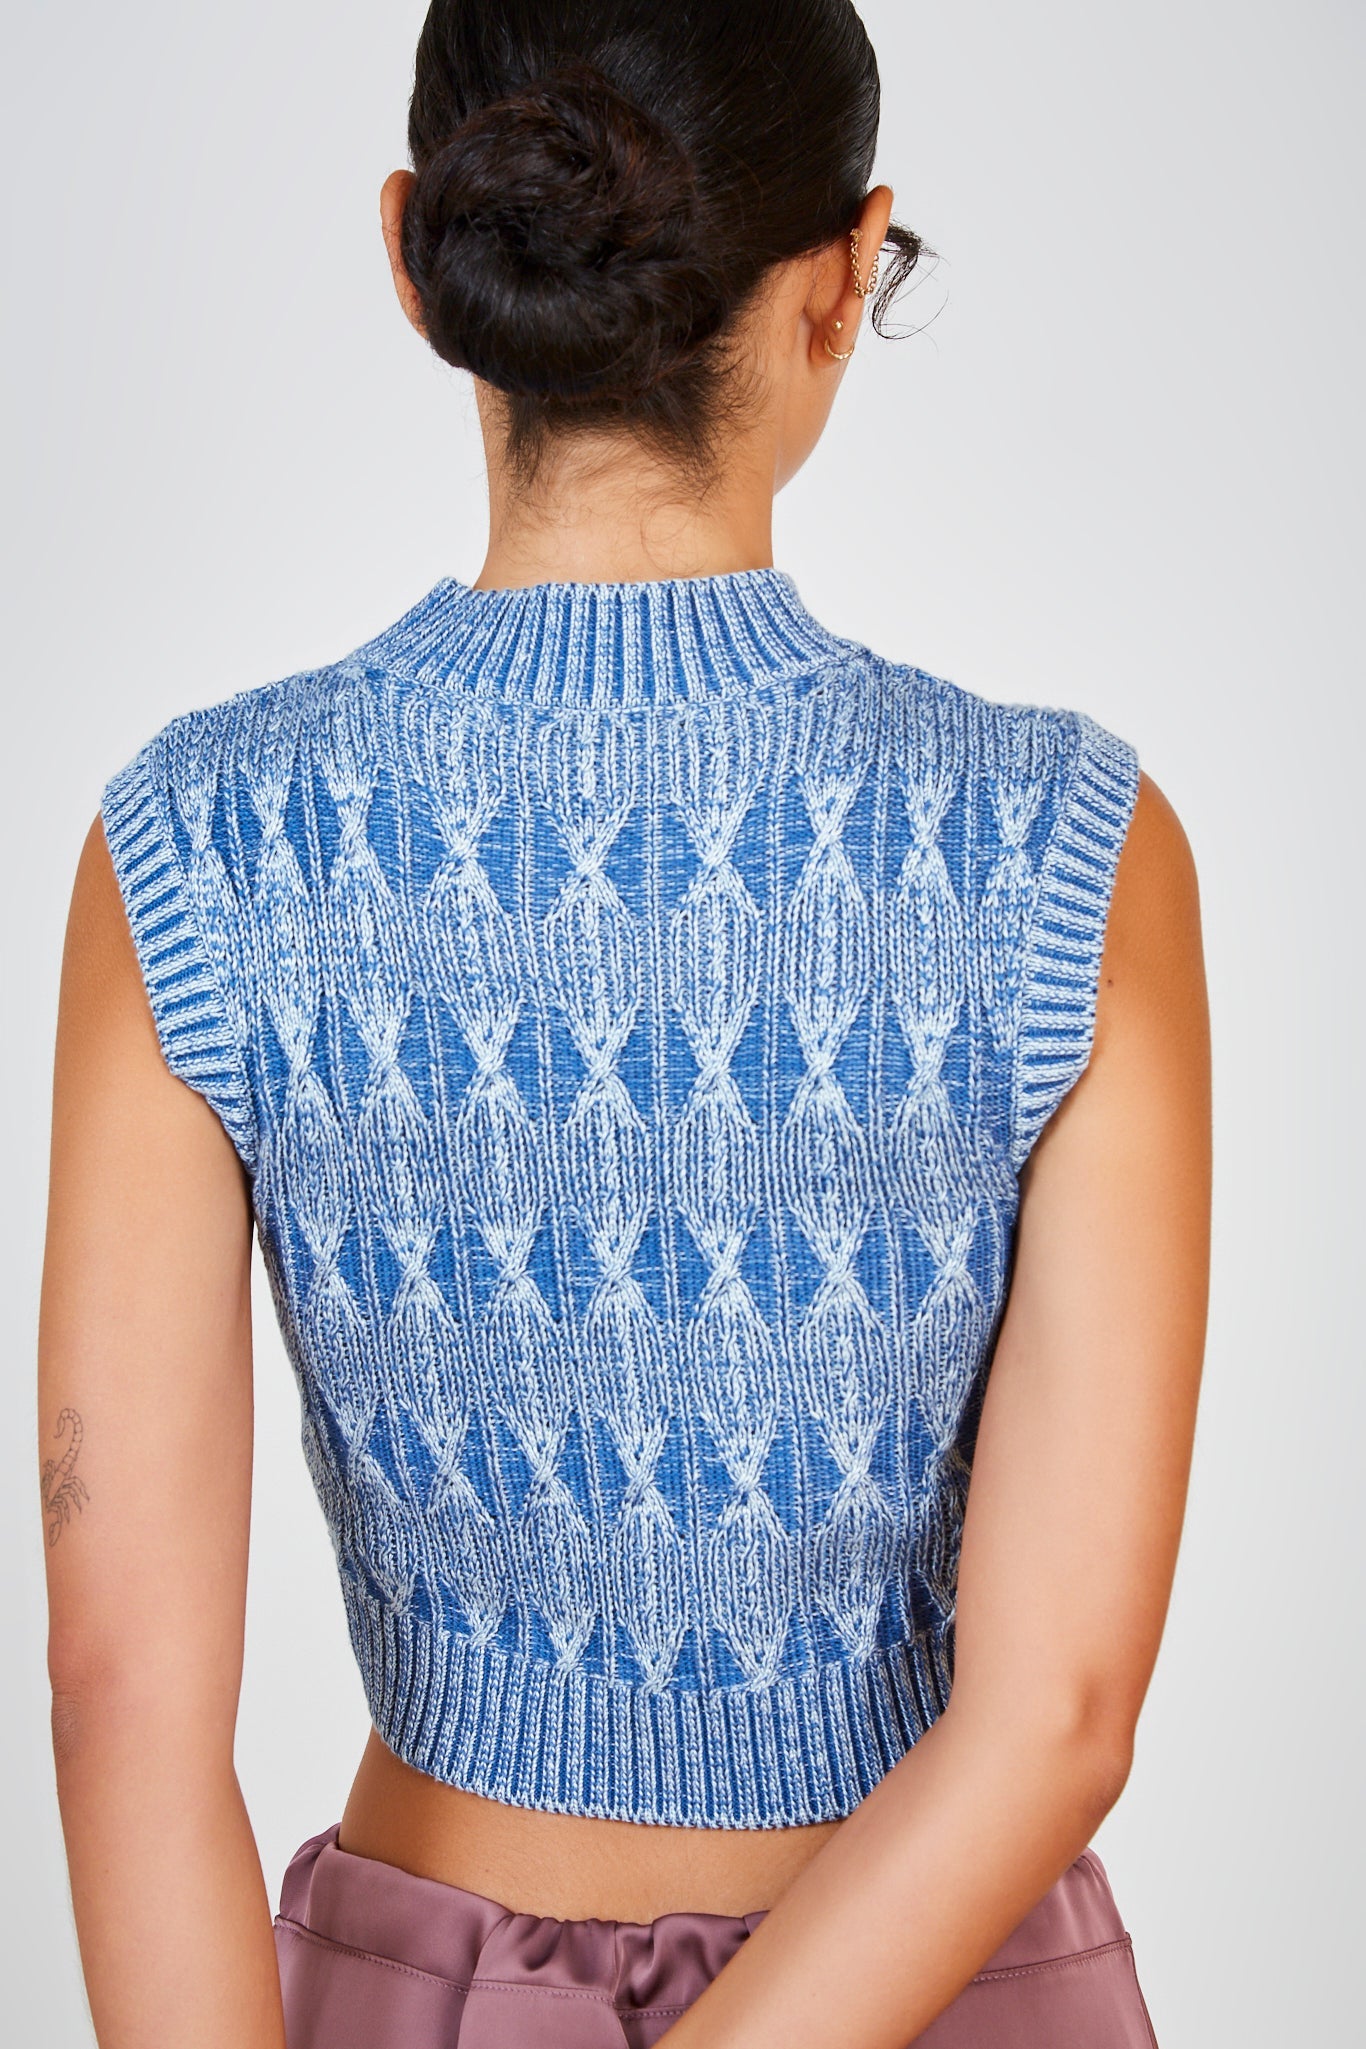 Light blue intarsia diamond weave sweater vest